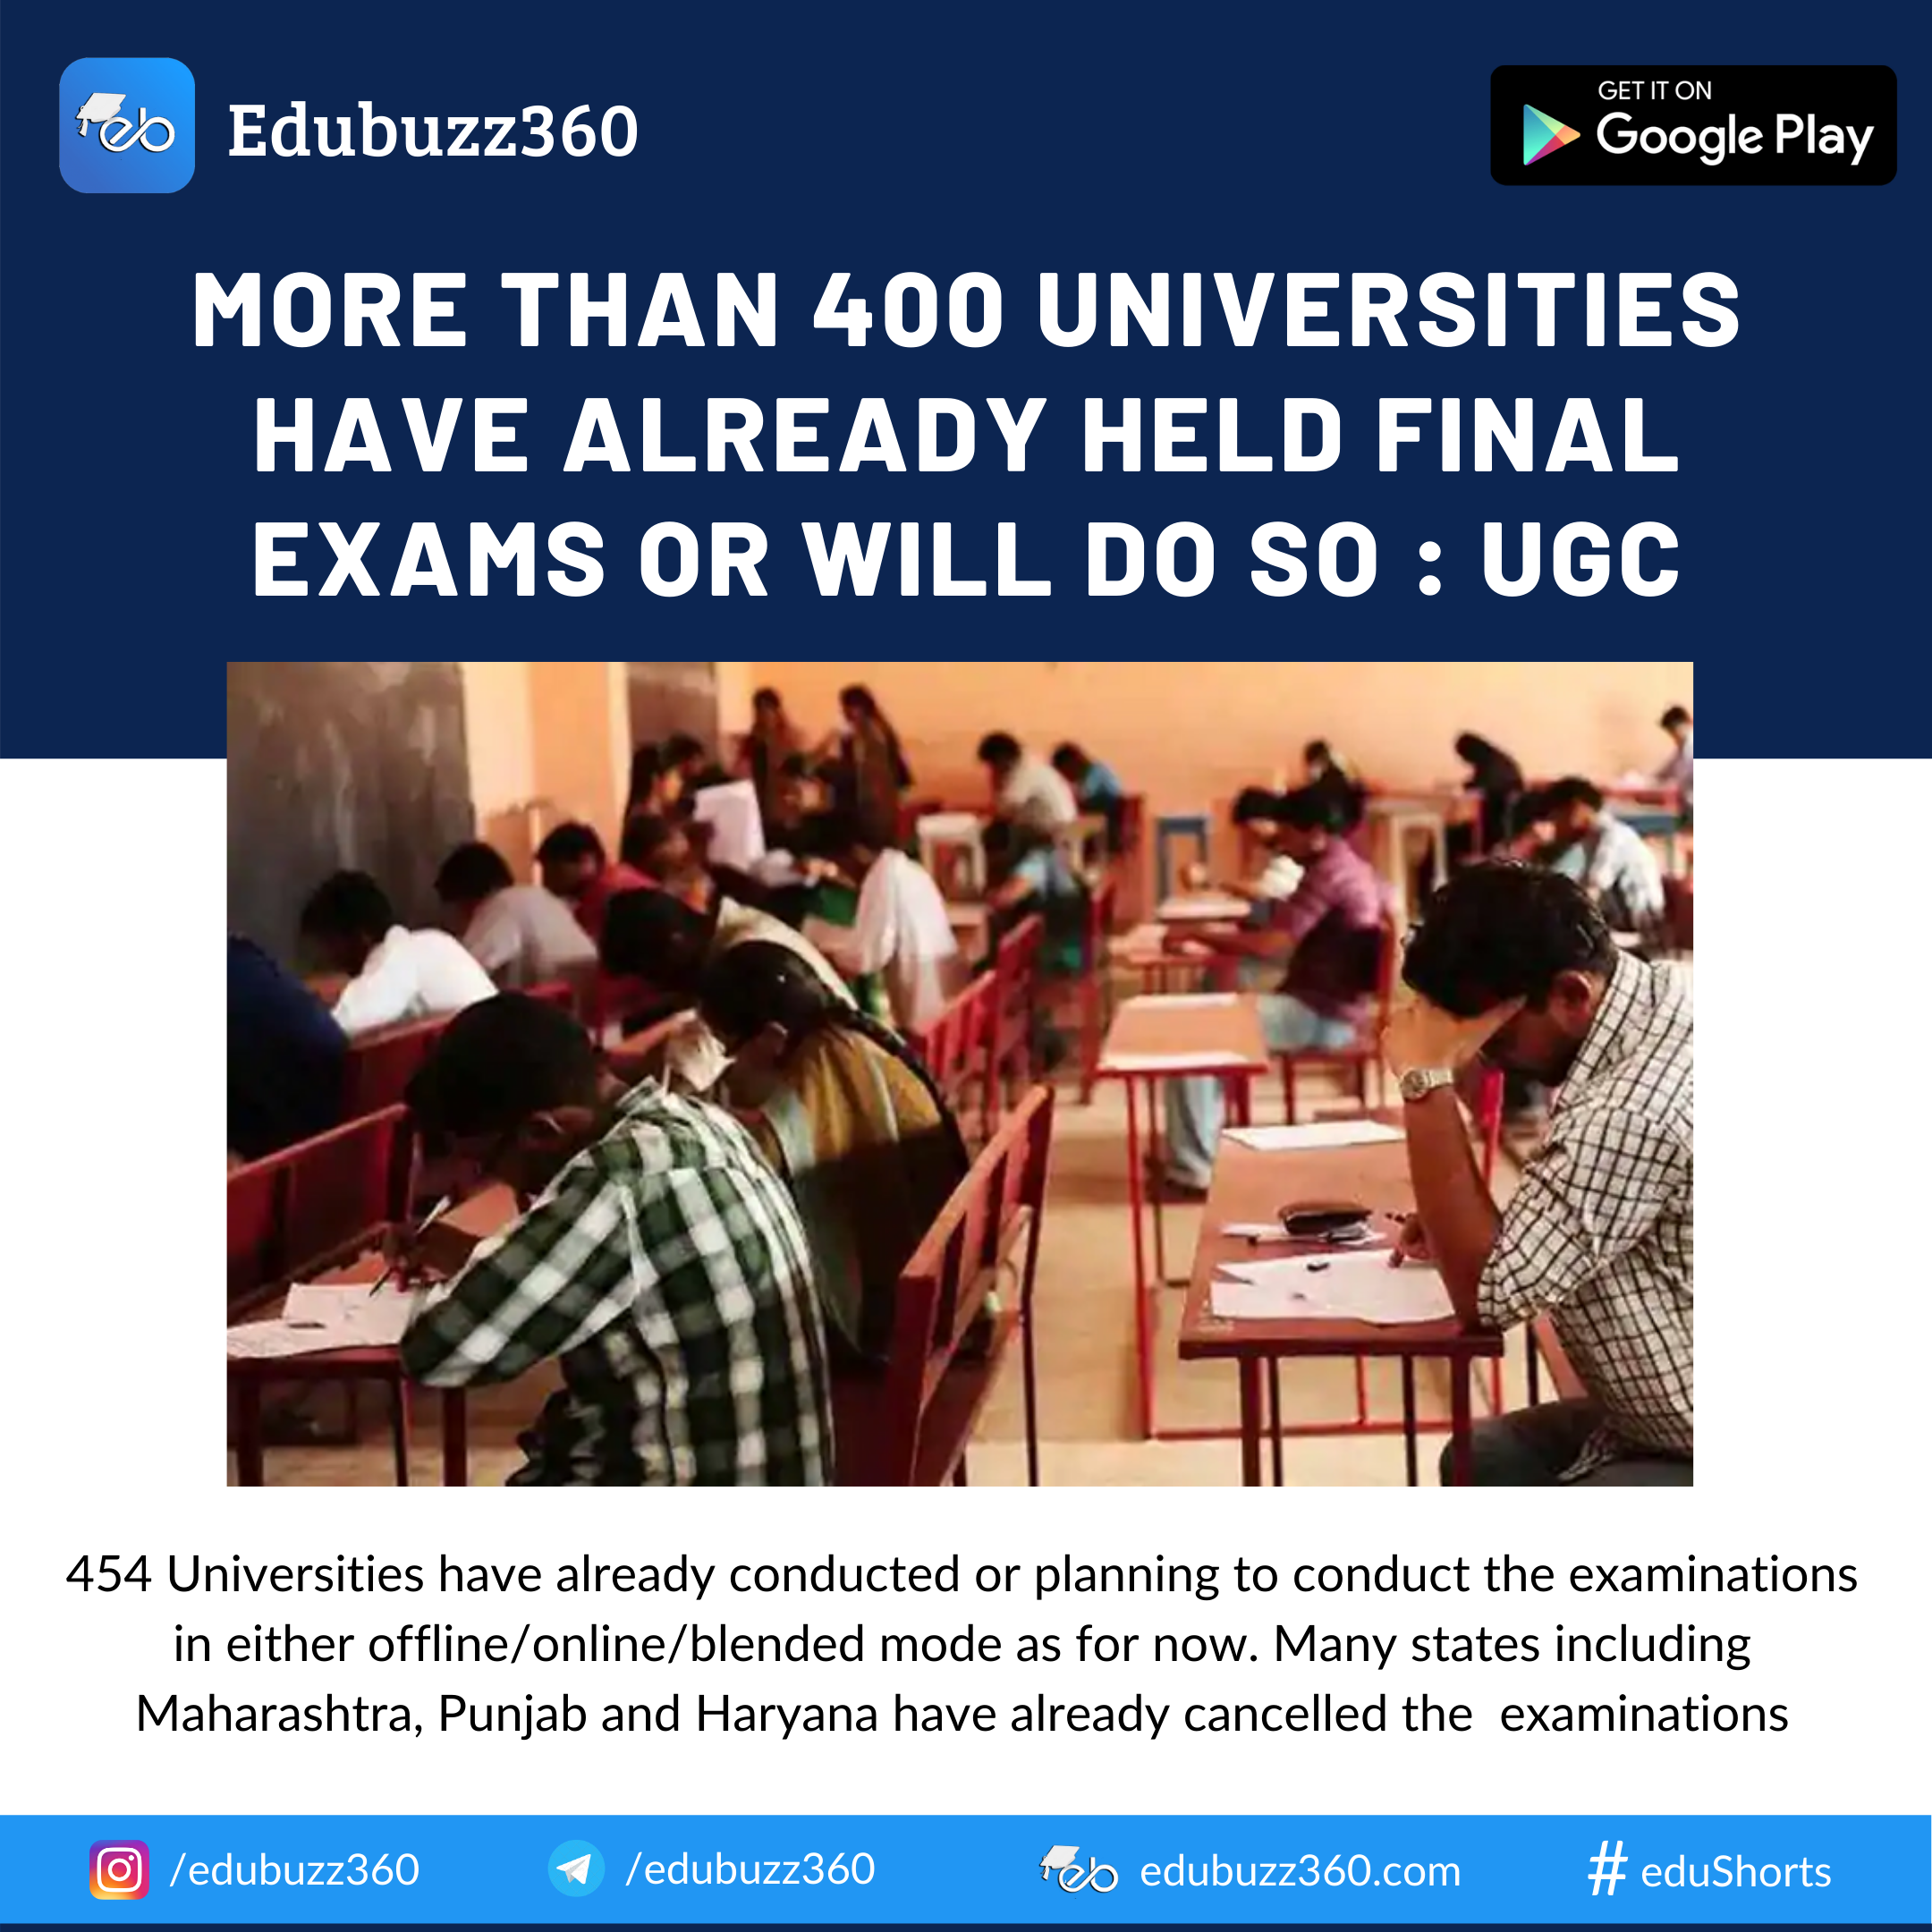 UGC response for Final years : Edubuzz360